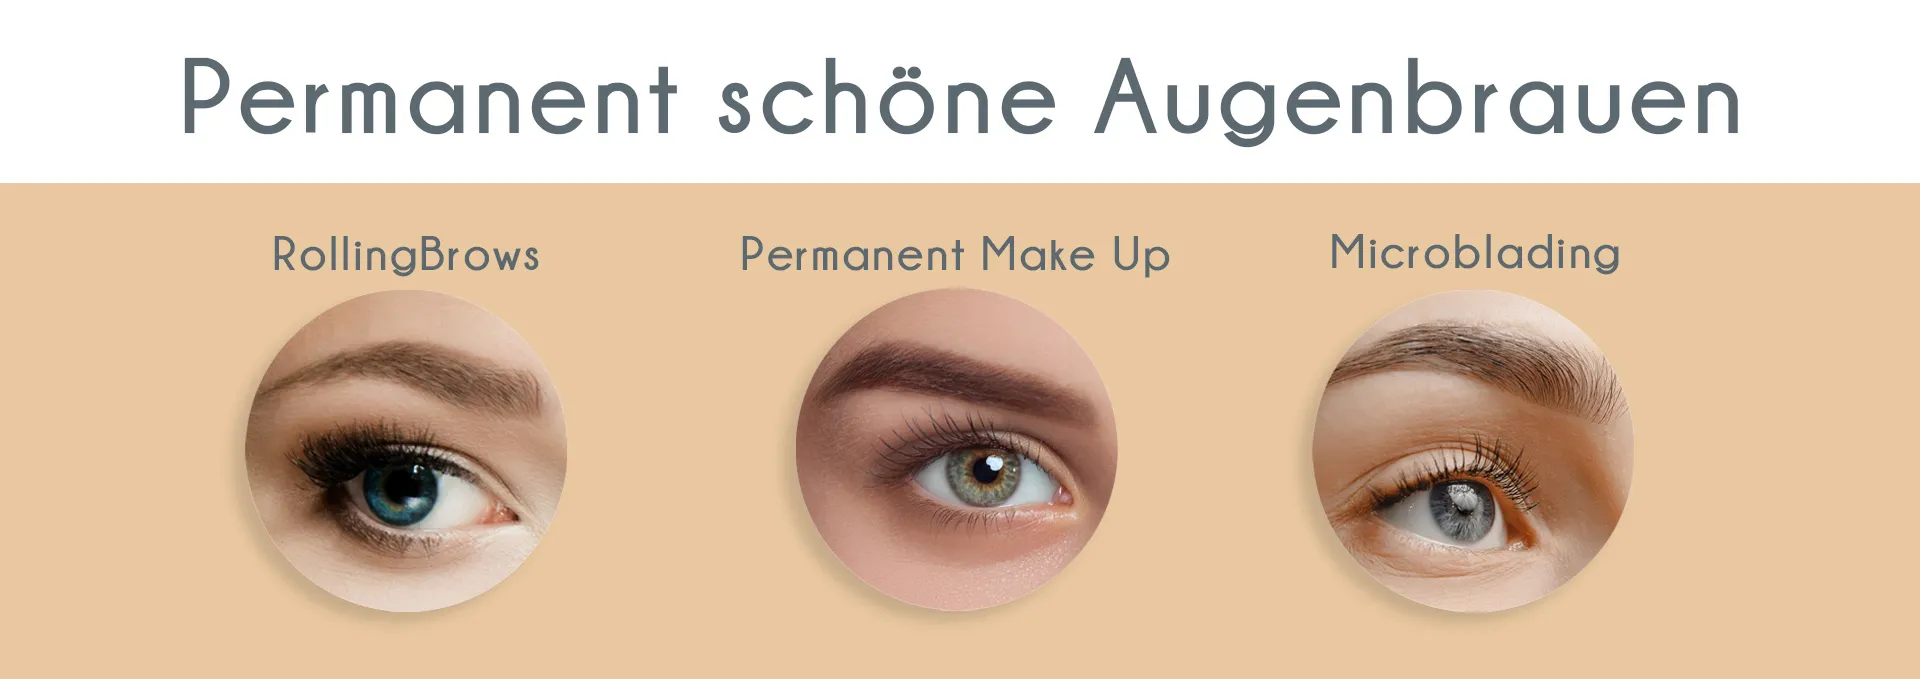 slider permanent-make-up augenbrauen1920x679